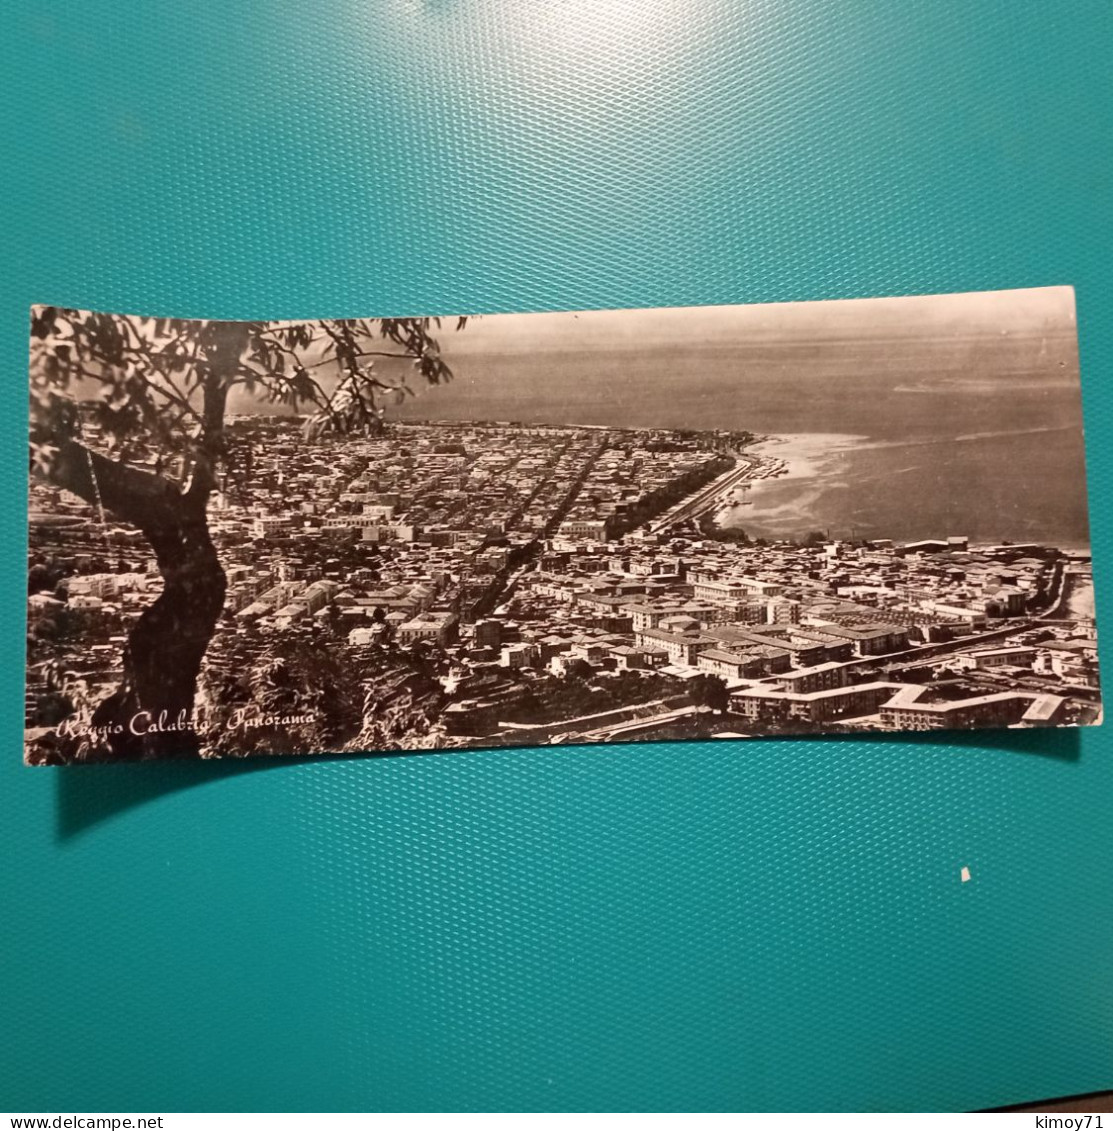 Cartolina Reggio Calabria - Panorama. Viaggiata 1956 - Reggio Calabria